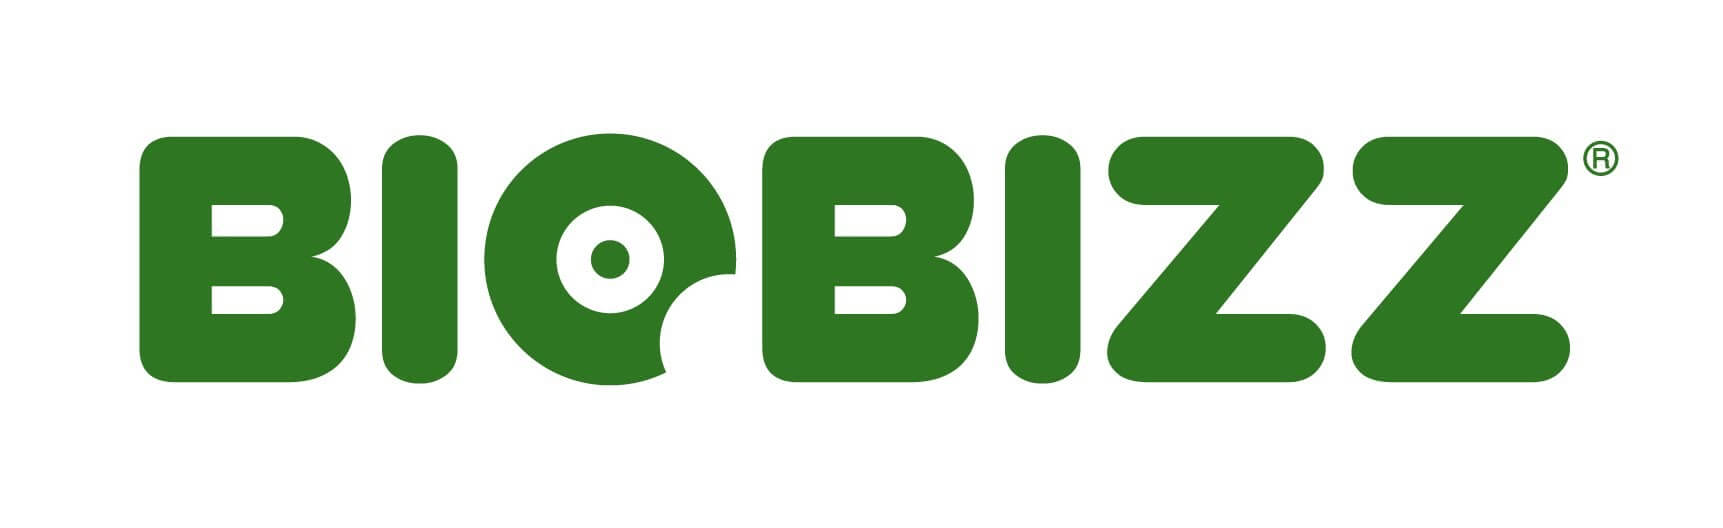 Biobizz - Hesi